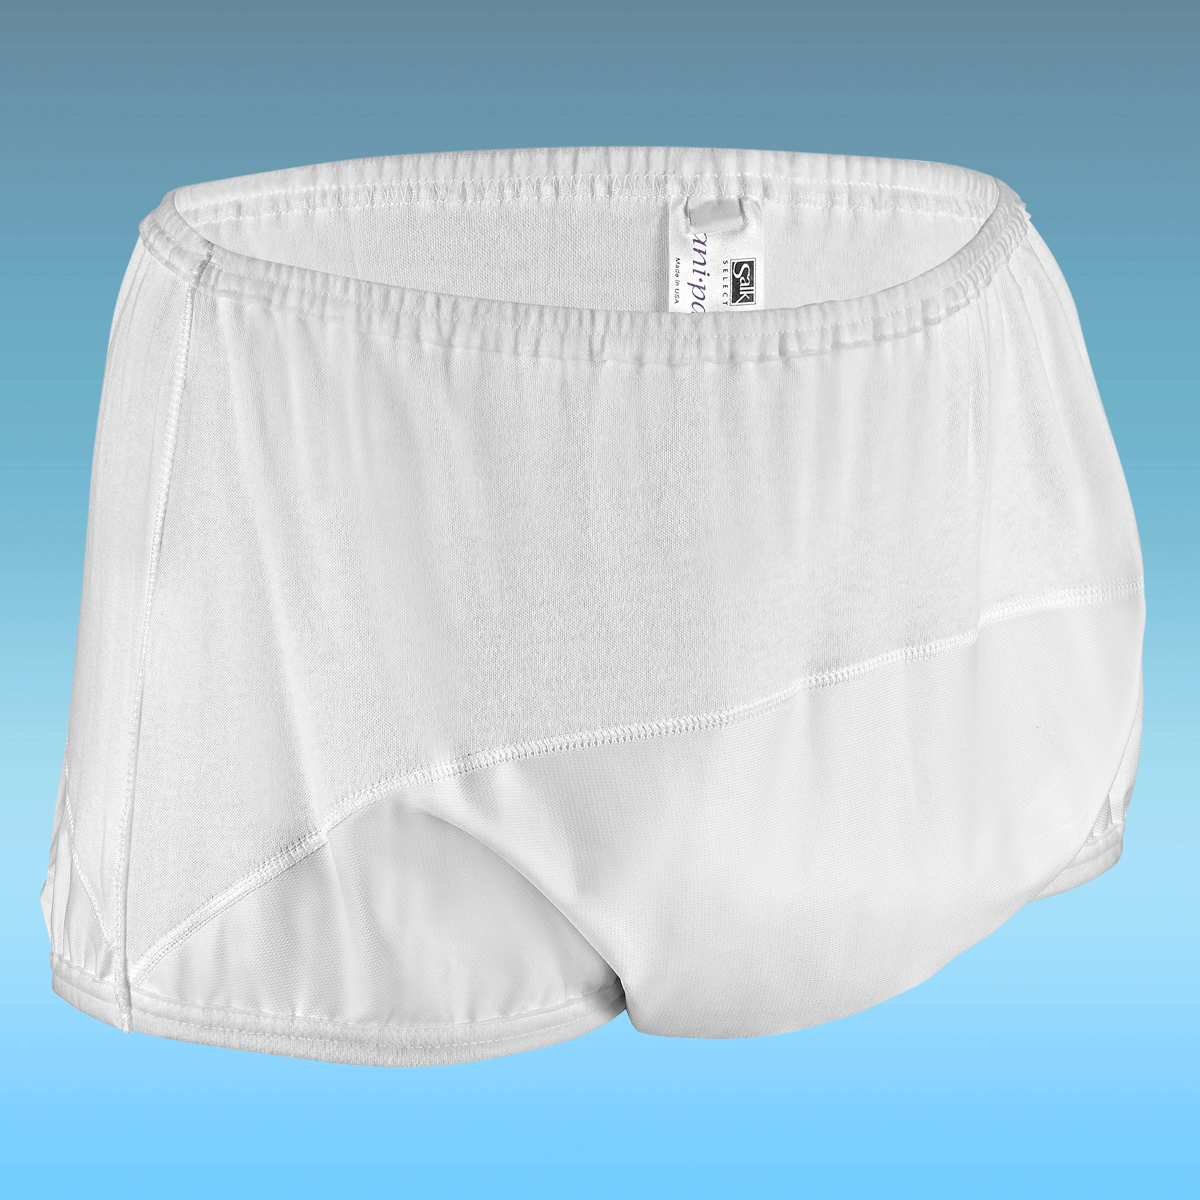 Adult Incontinence Plastic Pants